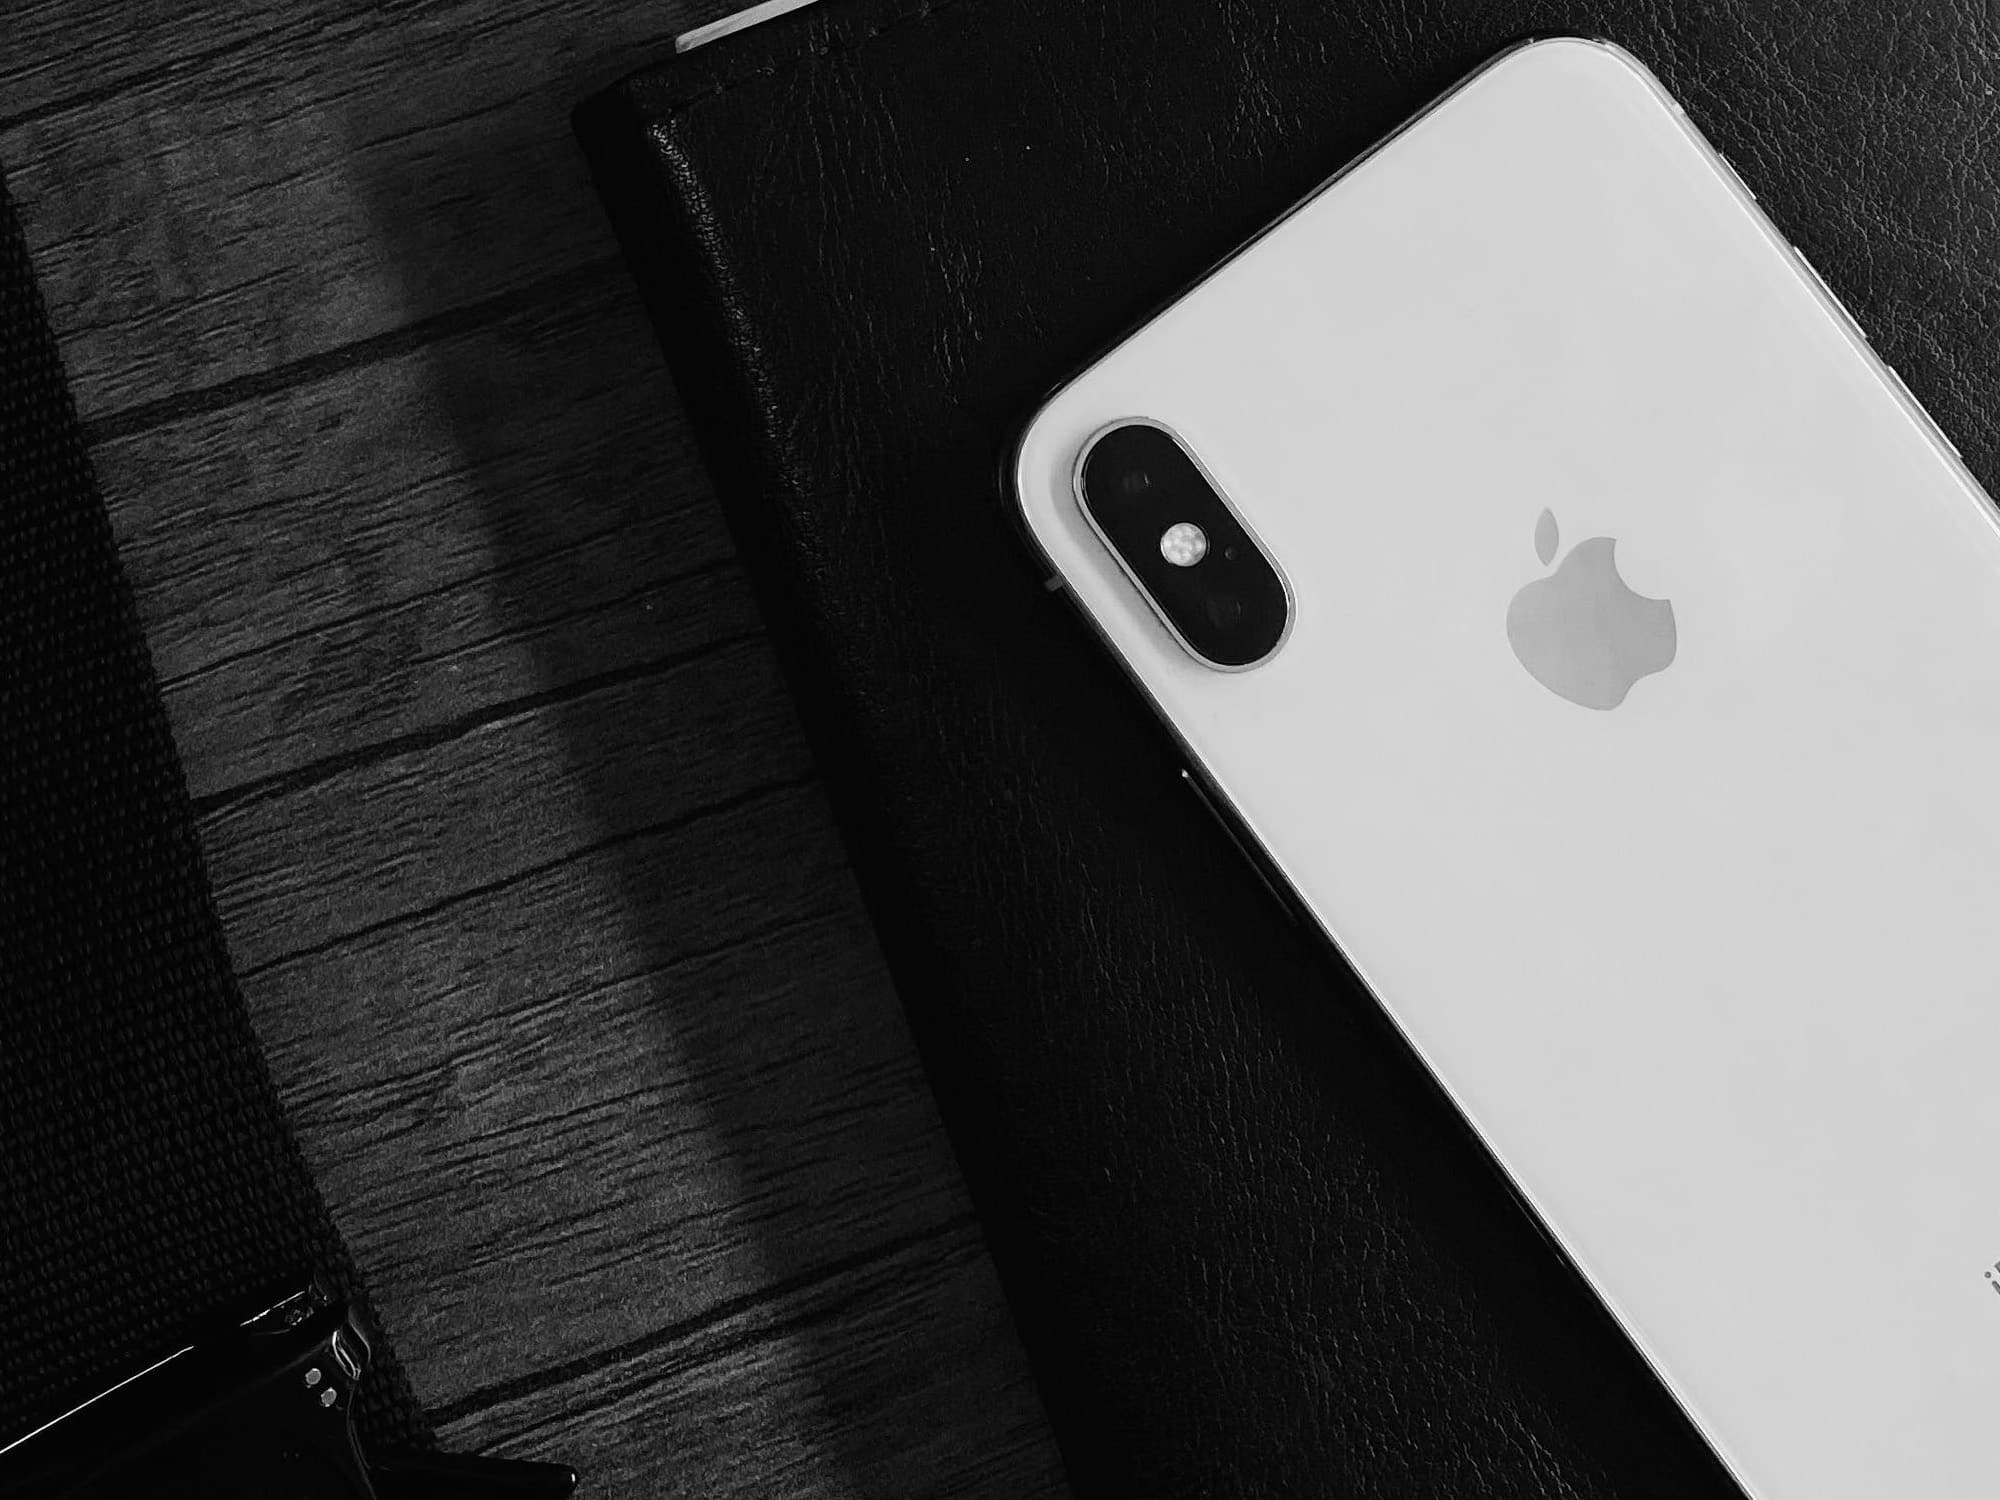 An iPhone X on a Table